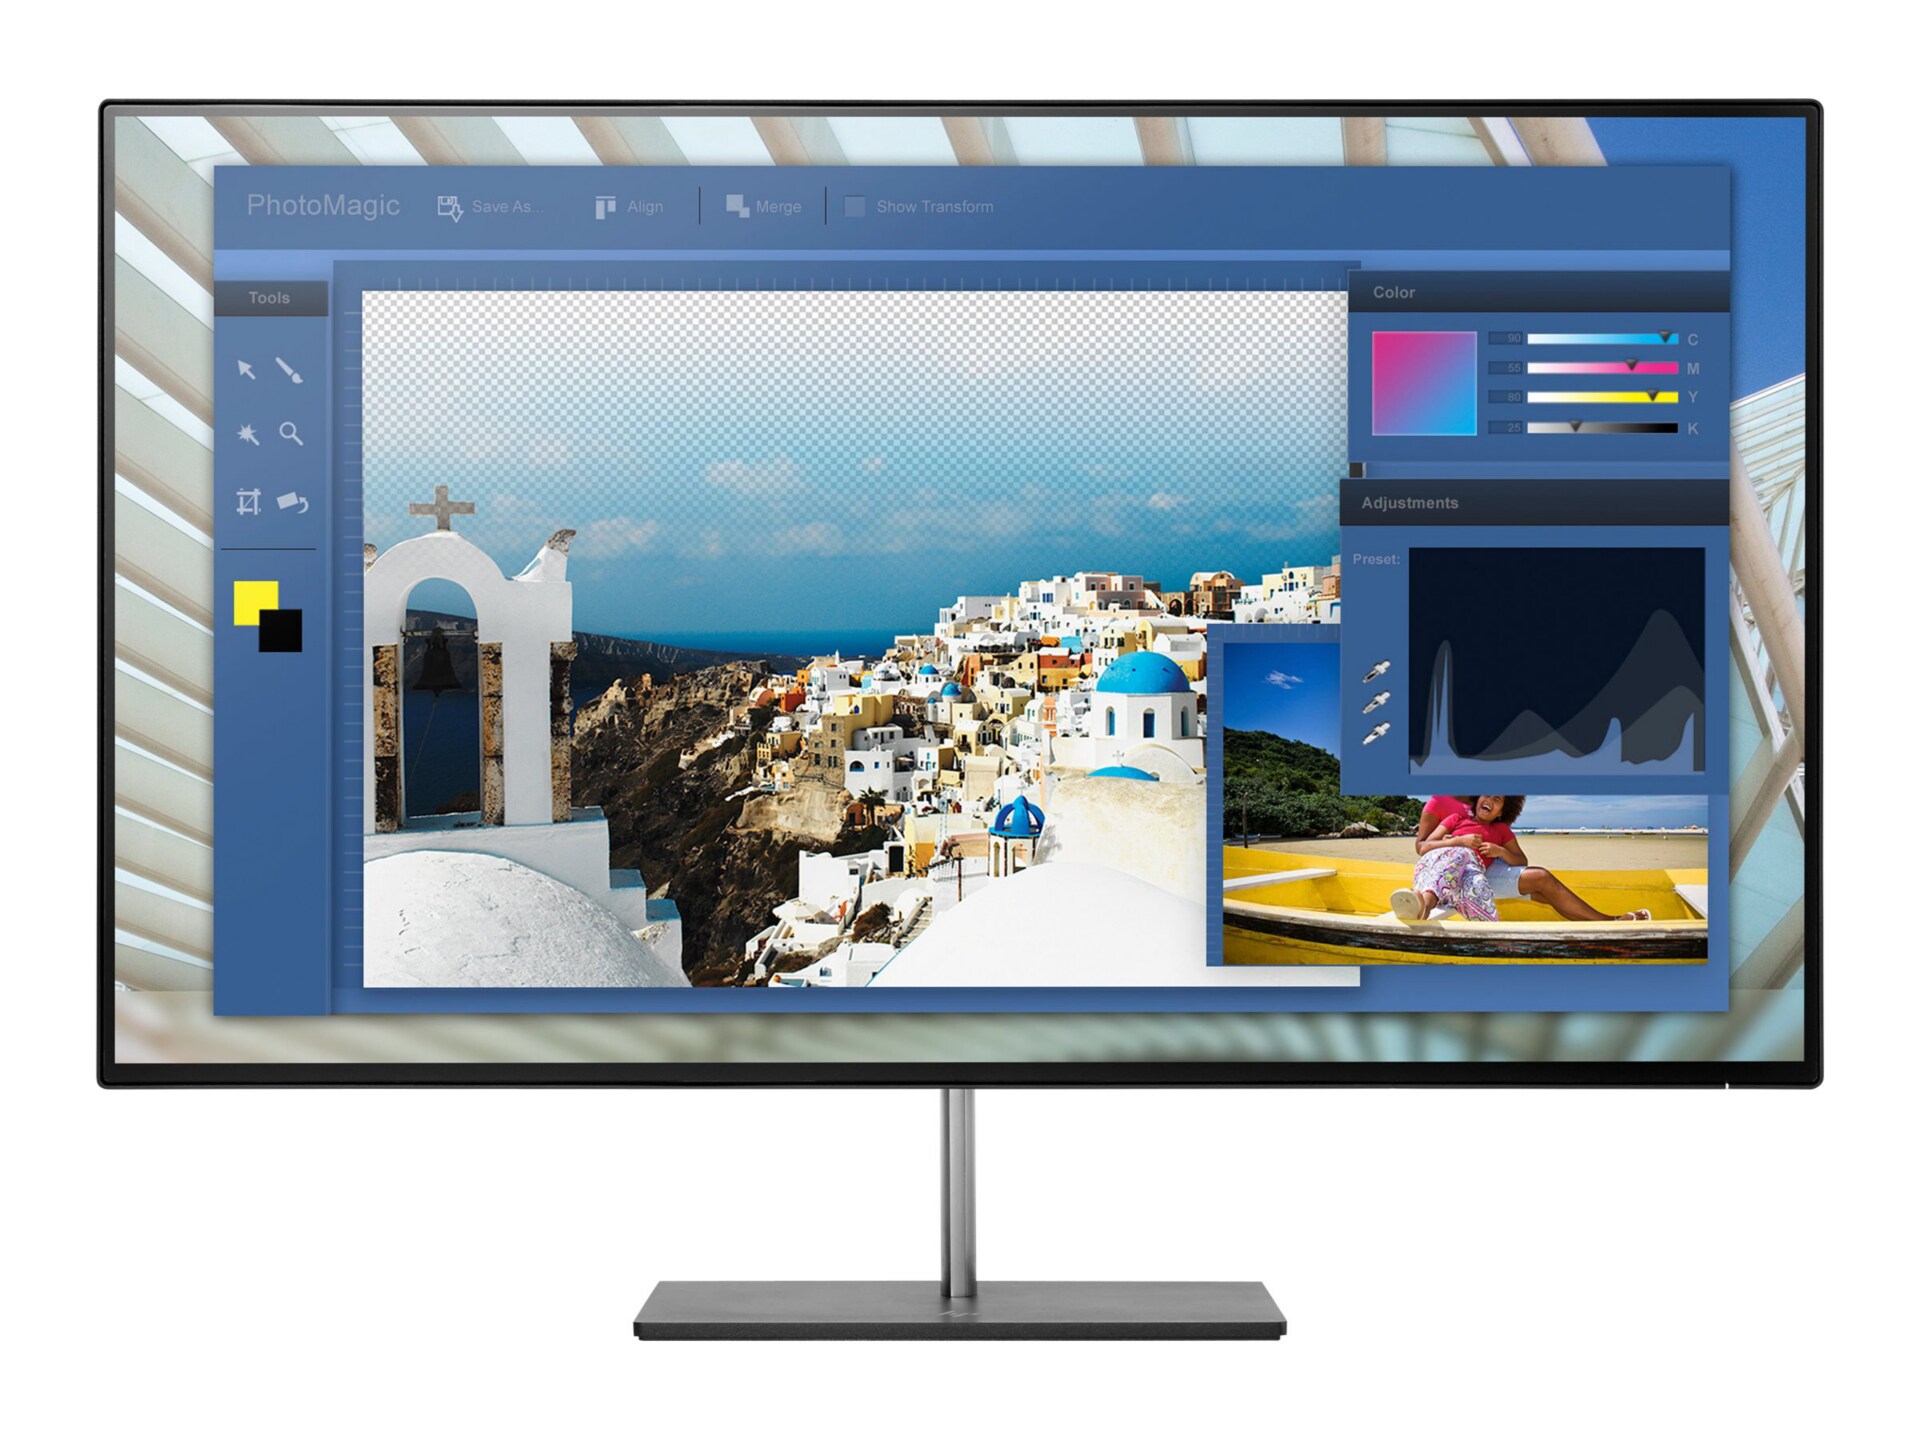 HP EliteDisplay S240n - LED monitor - Full HD (1080p) - 23.8" - Smart Buy